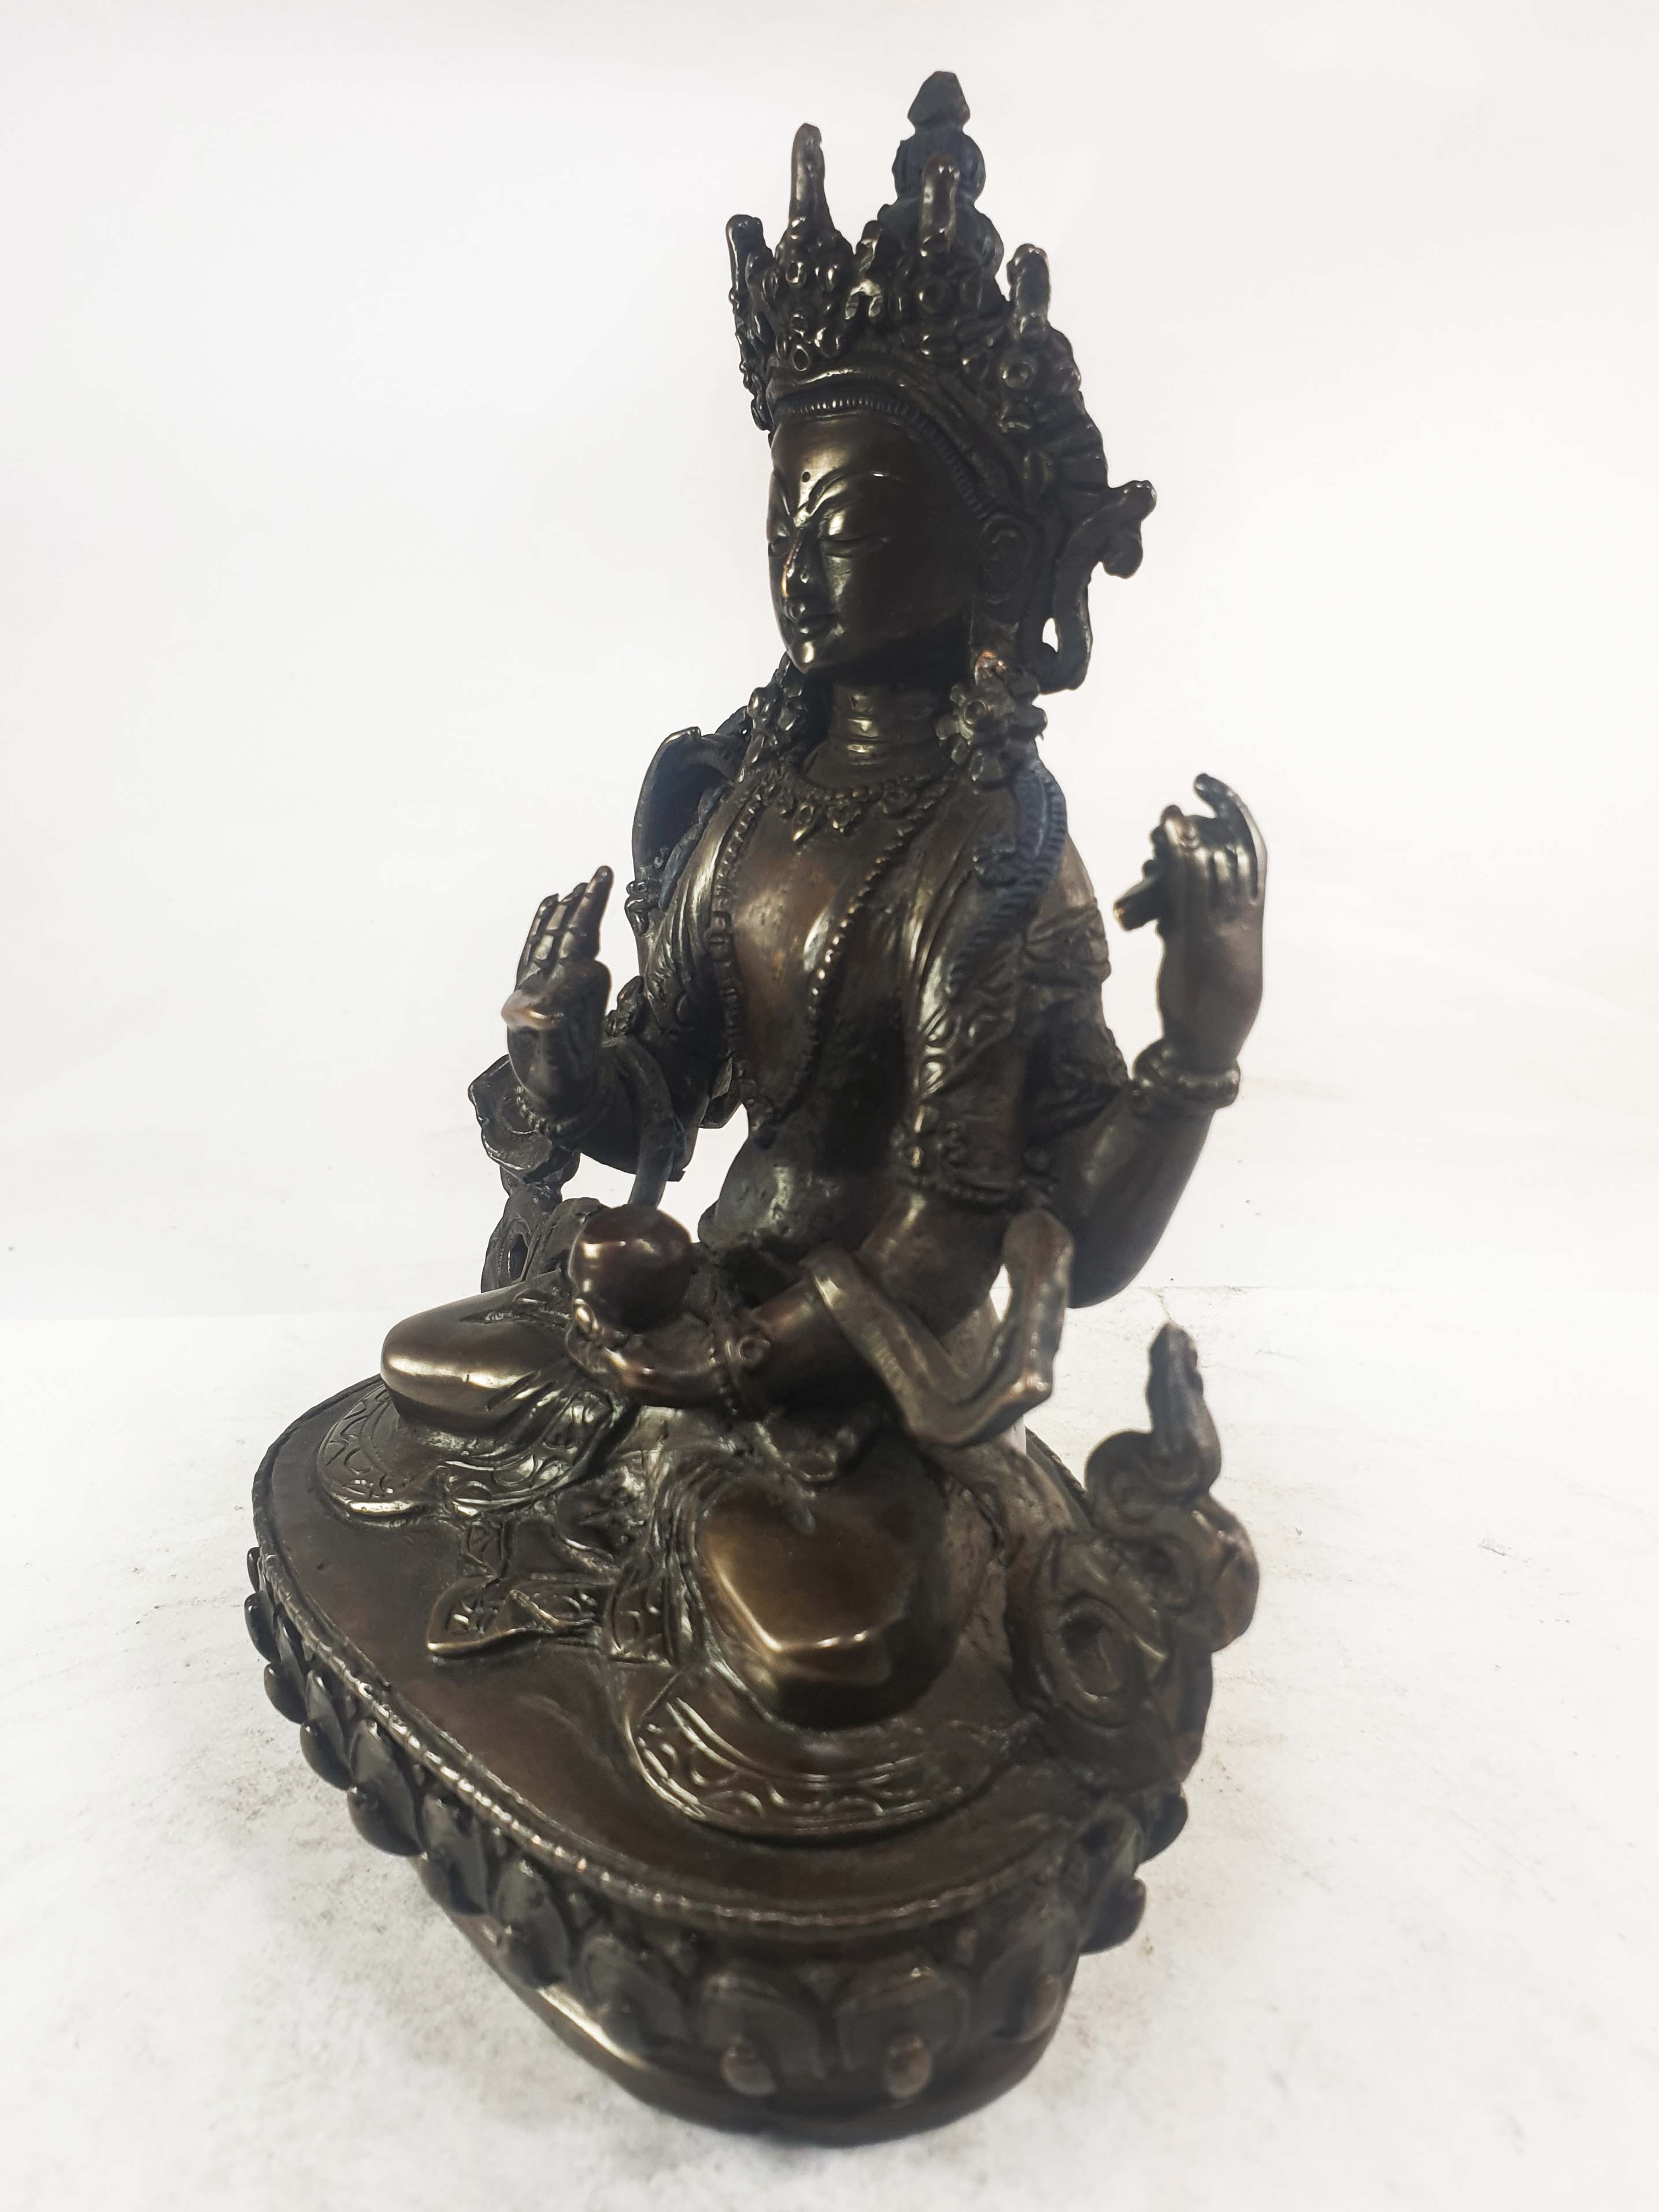 Buddhist Statues Of Pragya Prajnaparamita, chocolate Oxidized Chepame, Amitayus